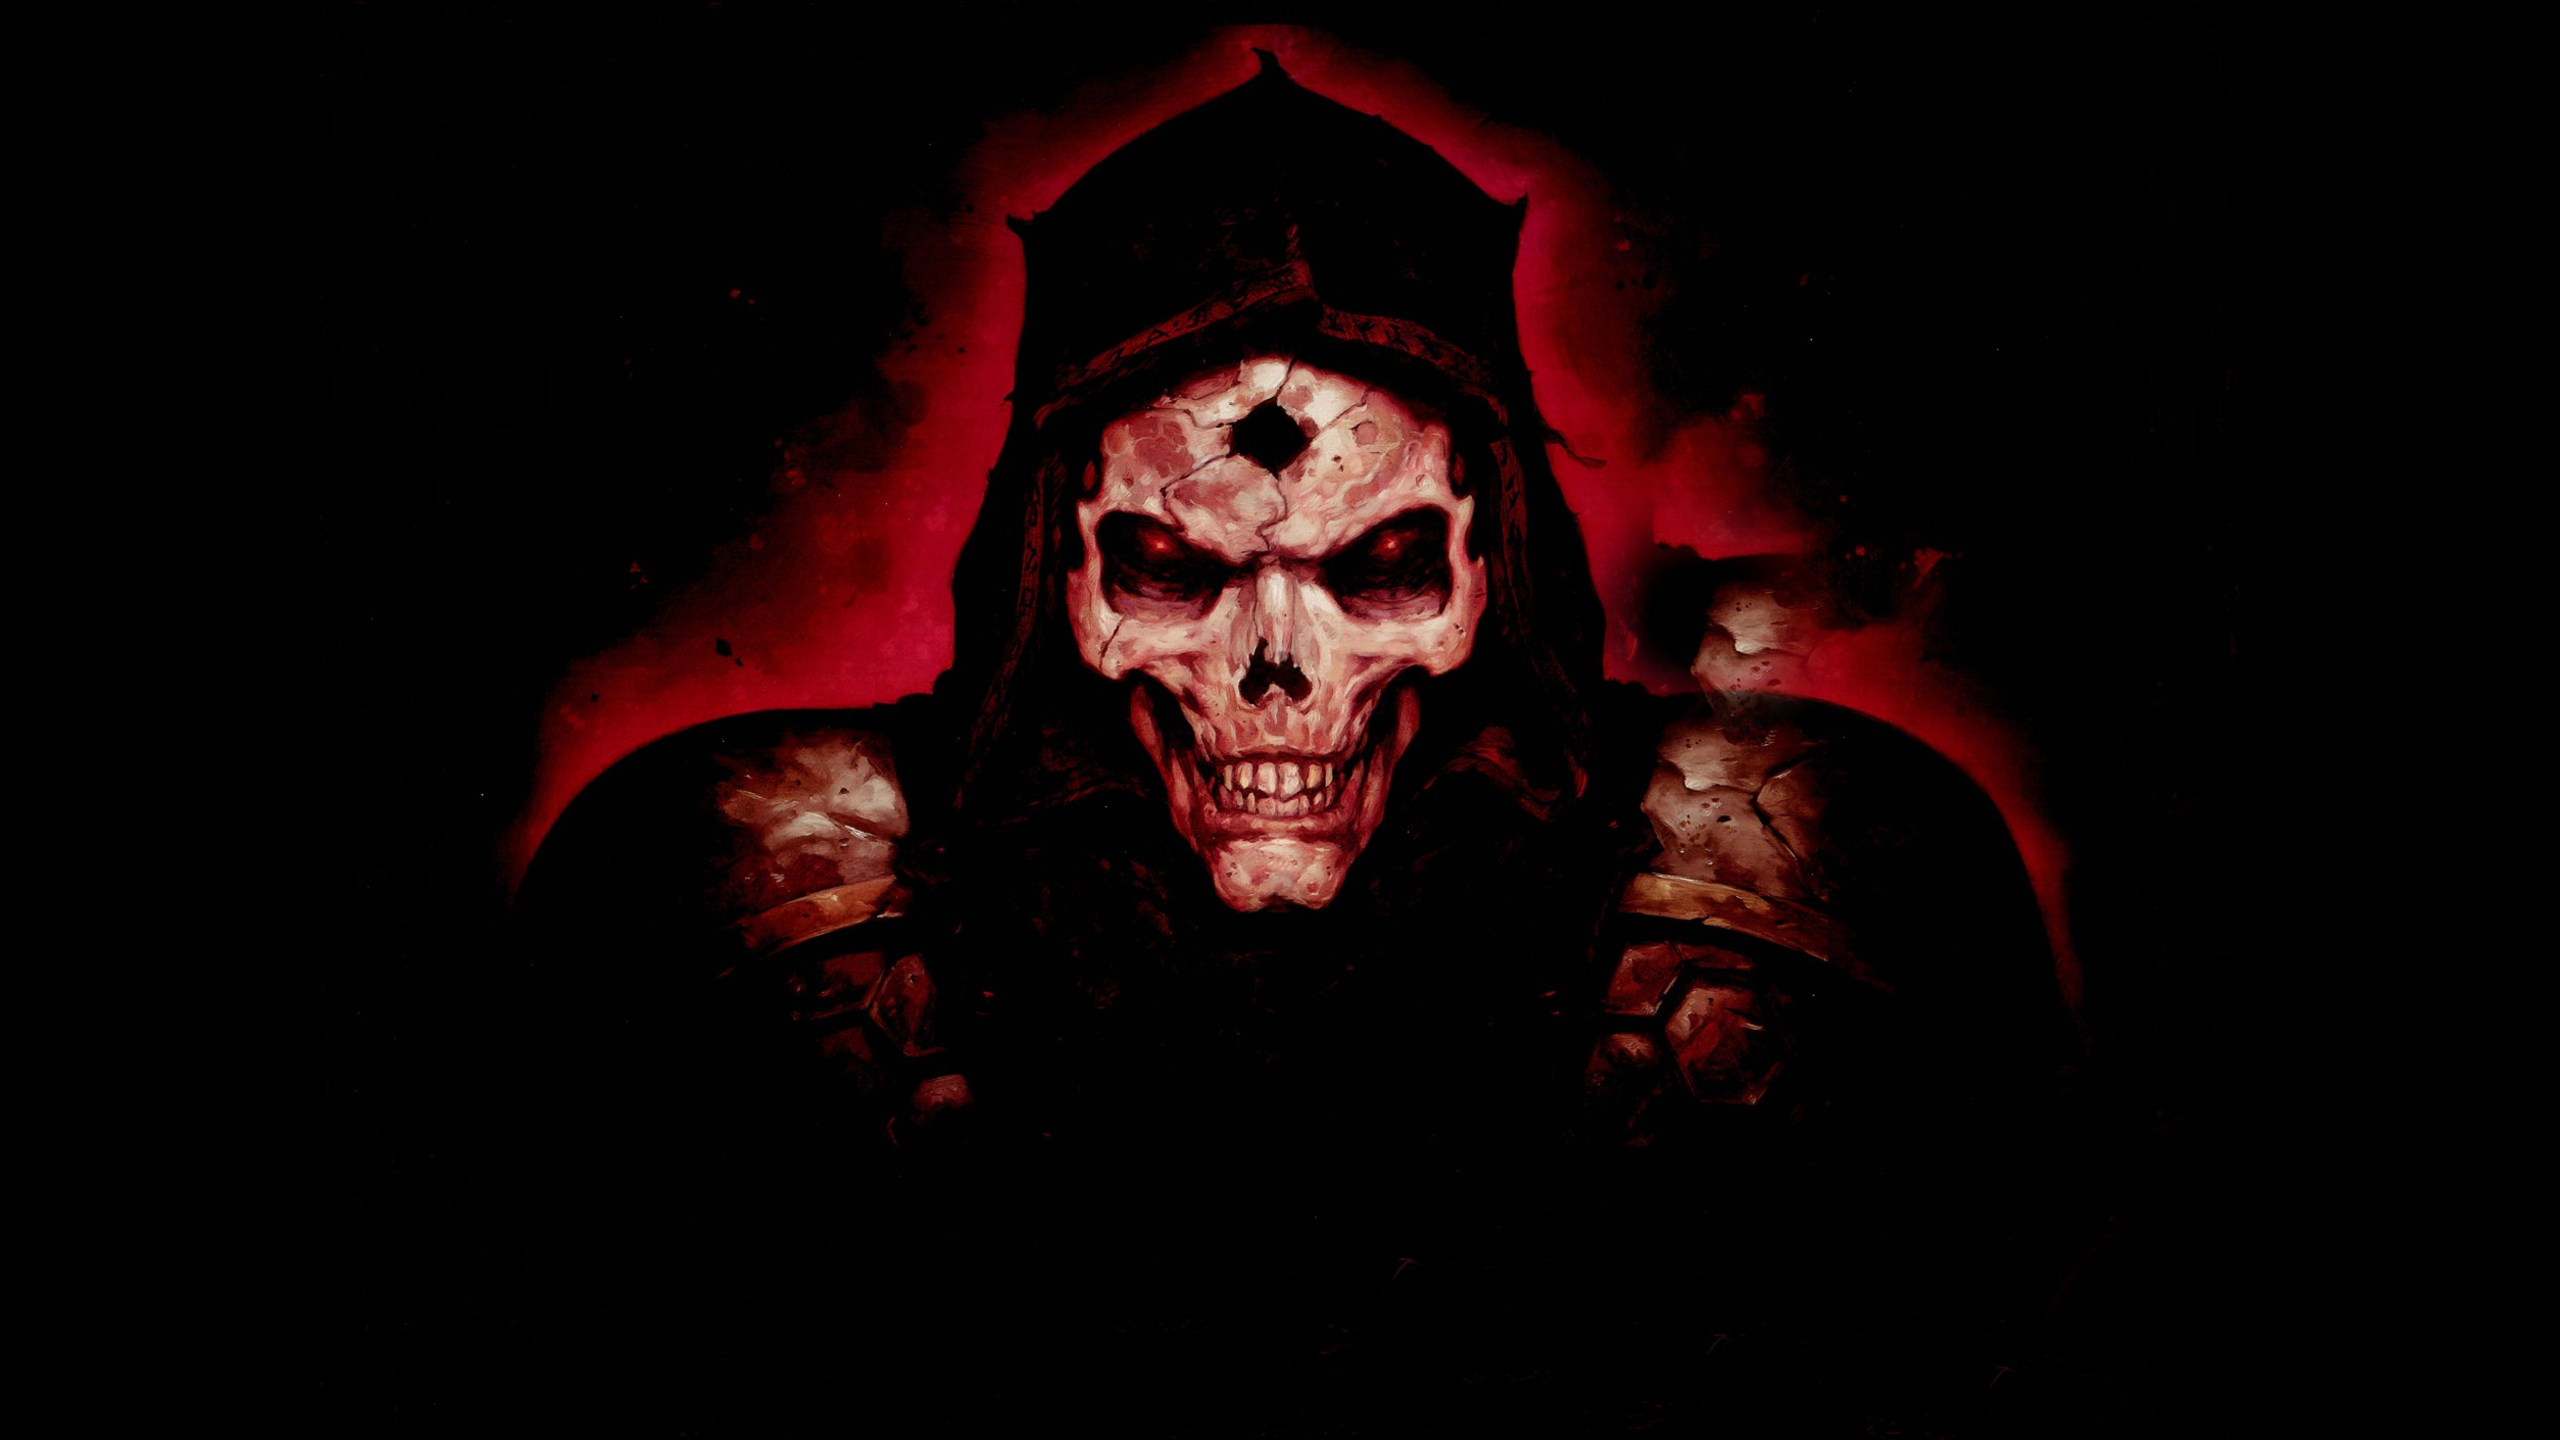 General 2560x1440 Diablo Diablo 2 fantasy art simple background skull screen shot